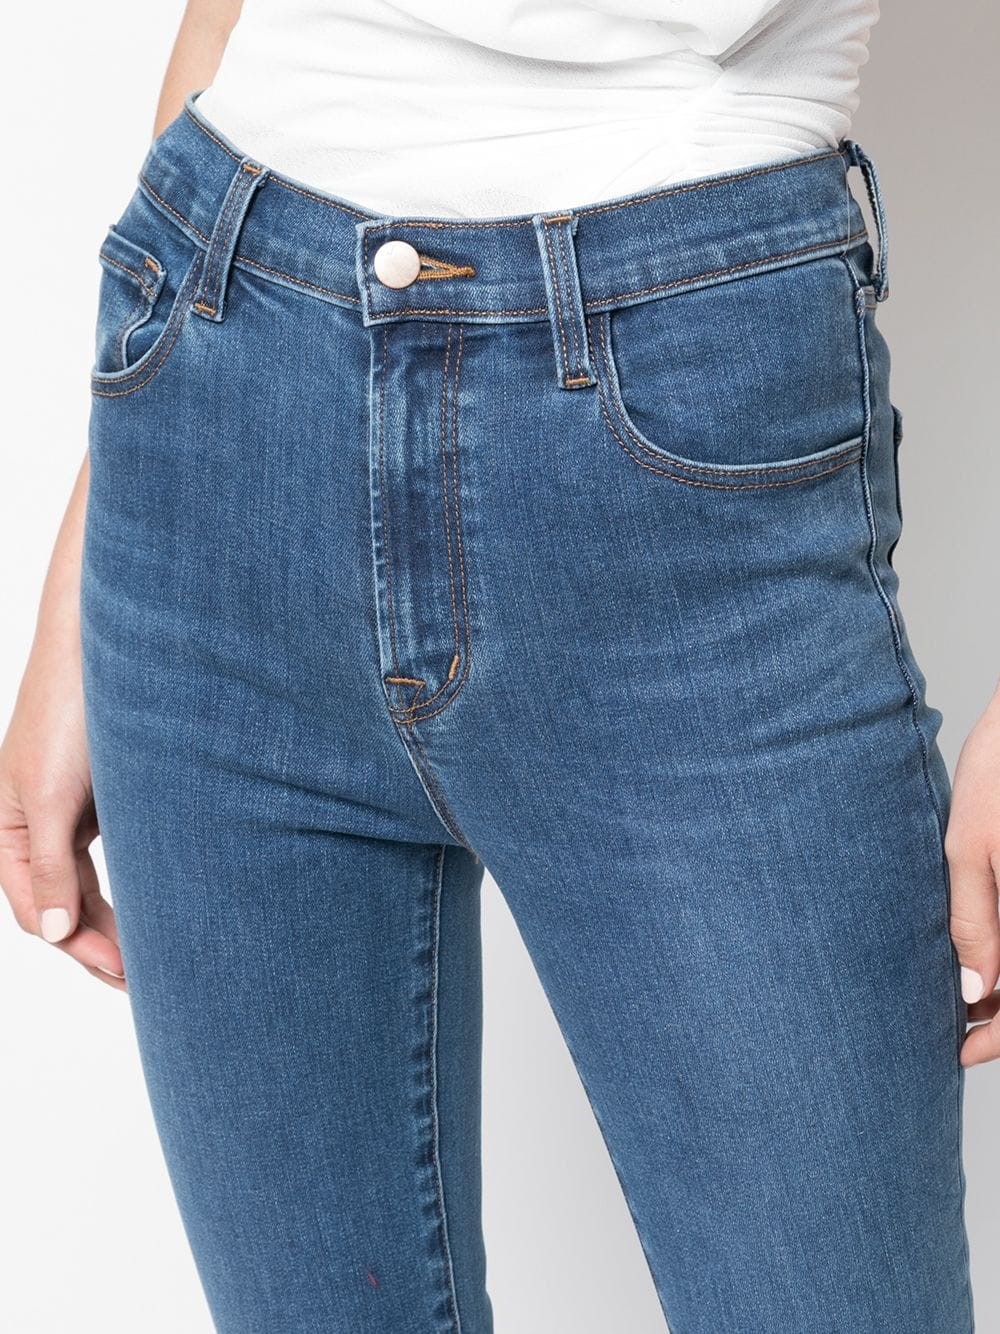 skinny brand jeans